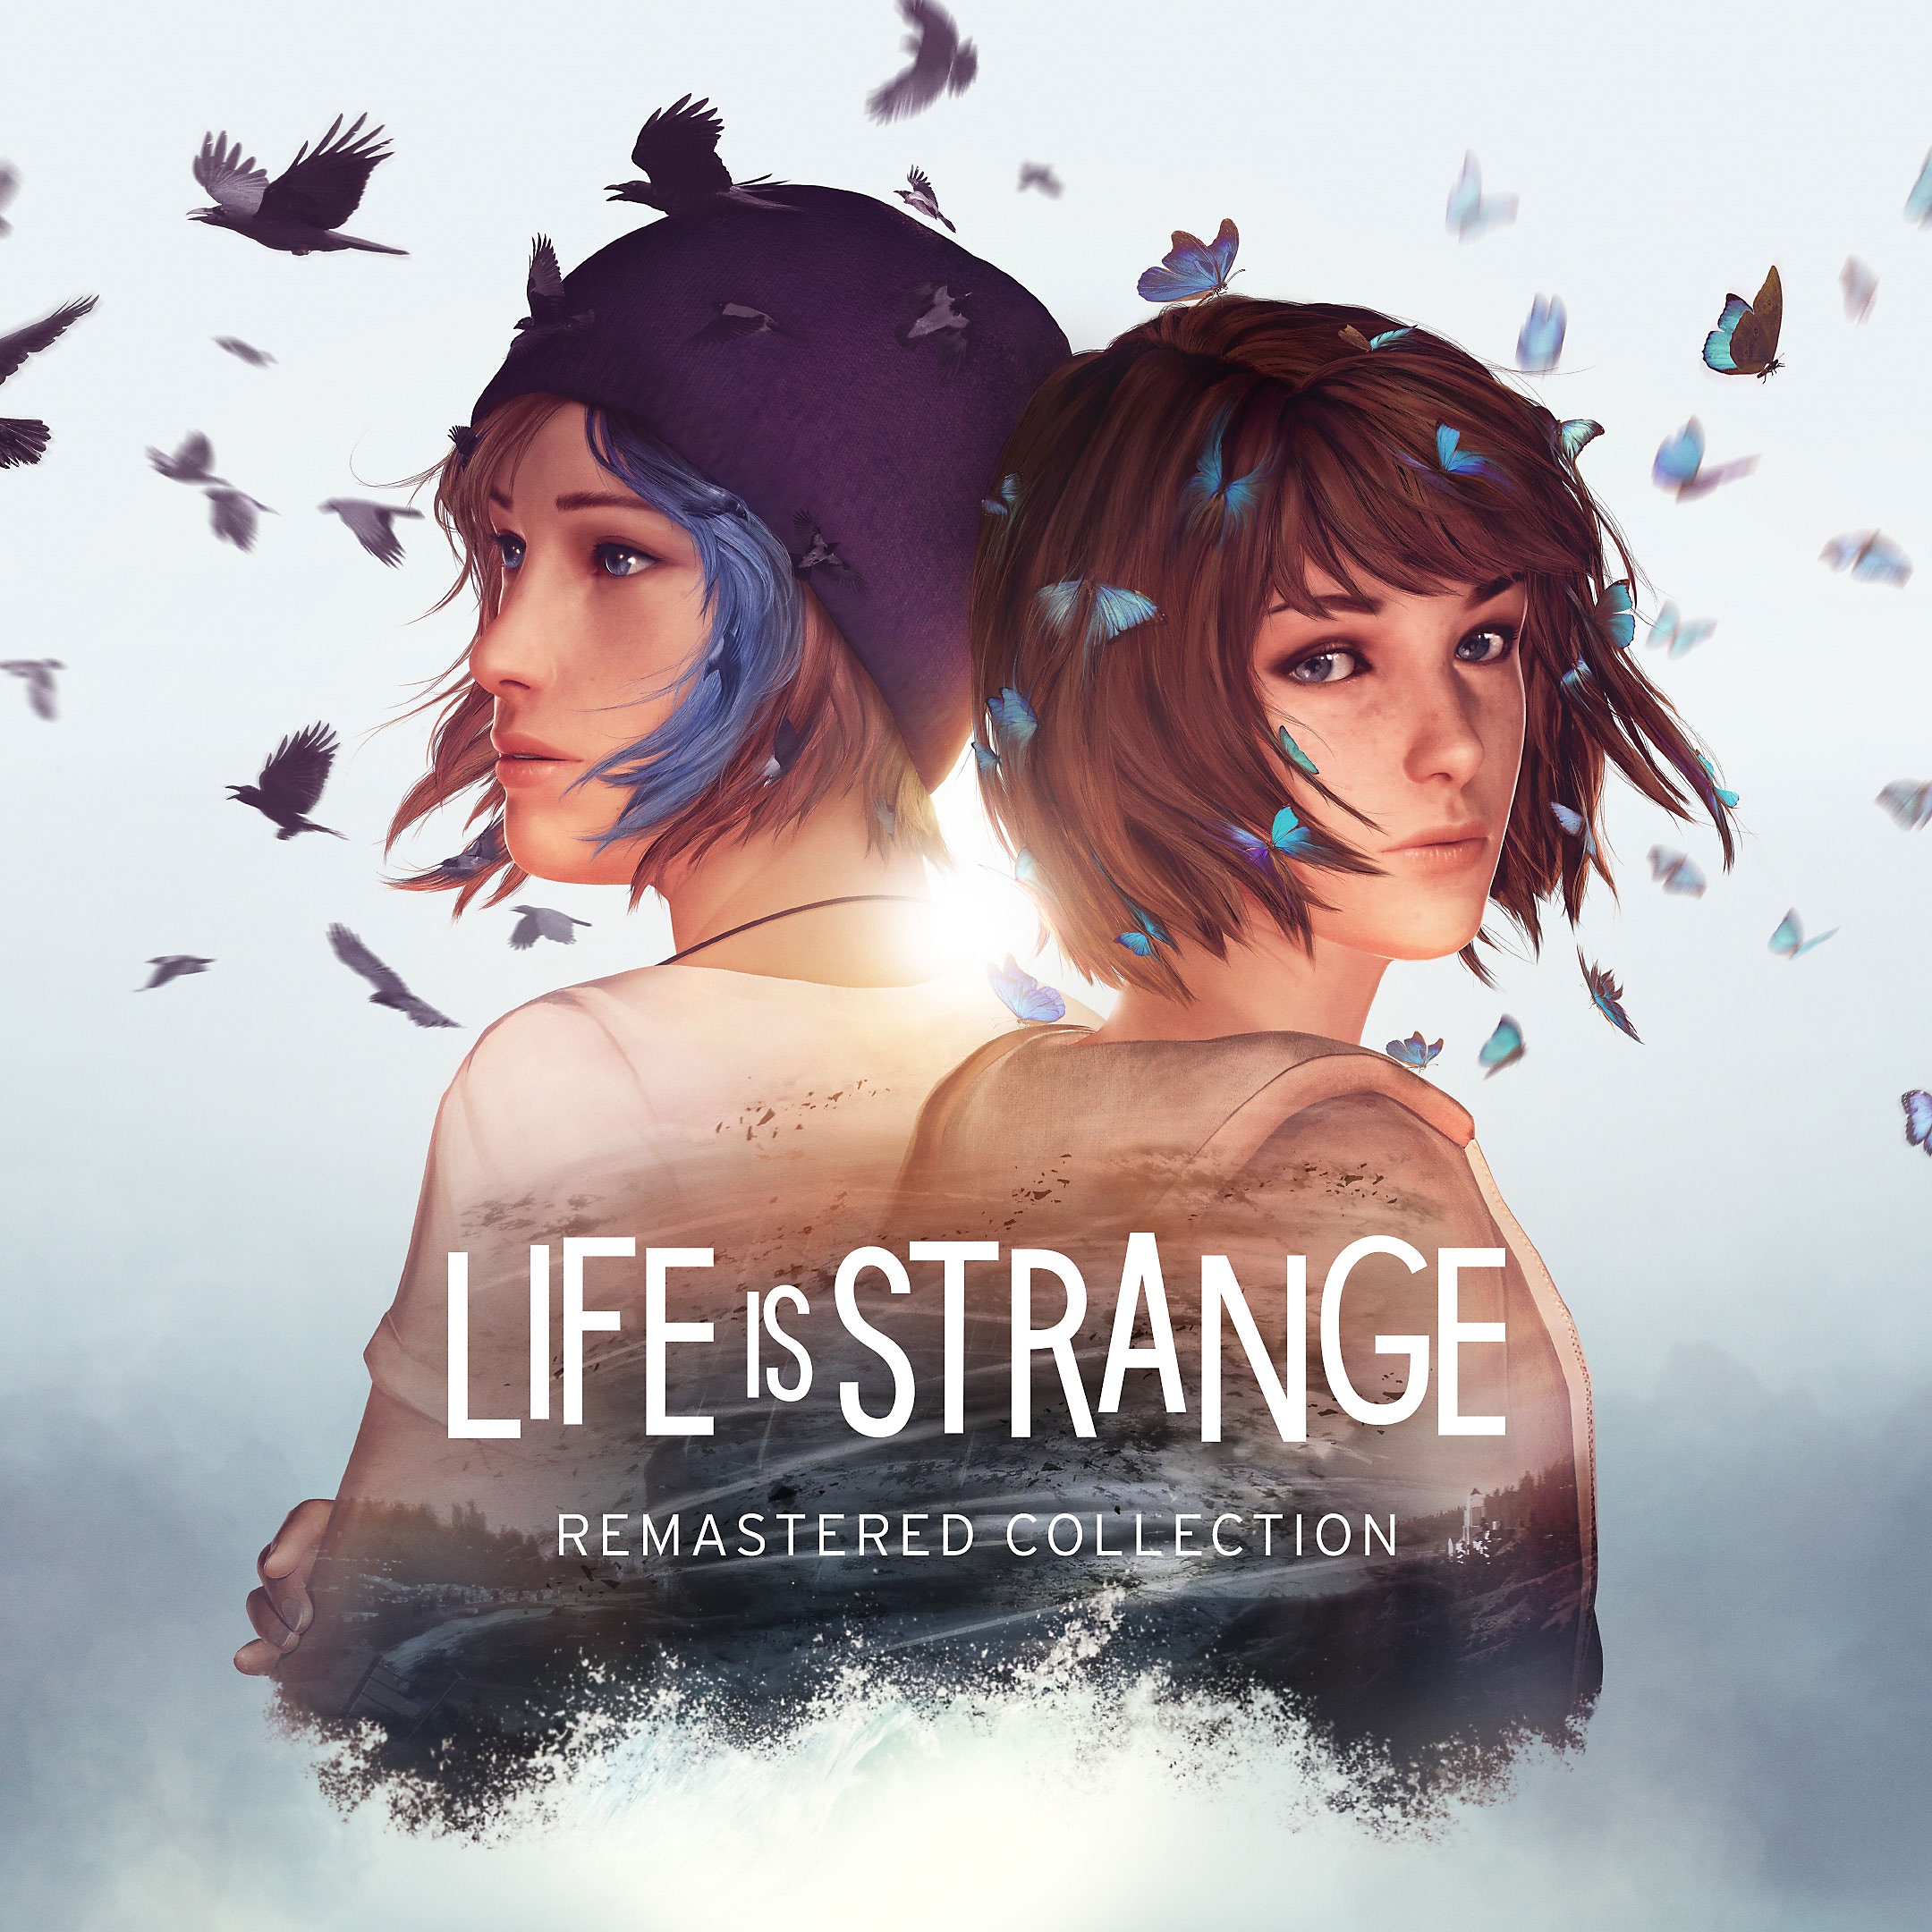 Life is Strange Remastered Collection – kaupan kuvitus